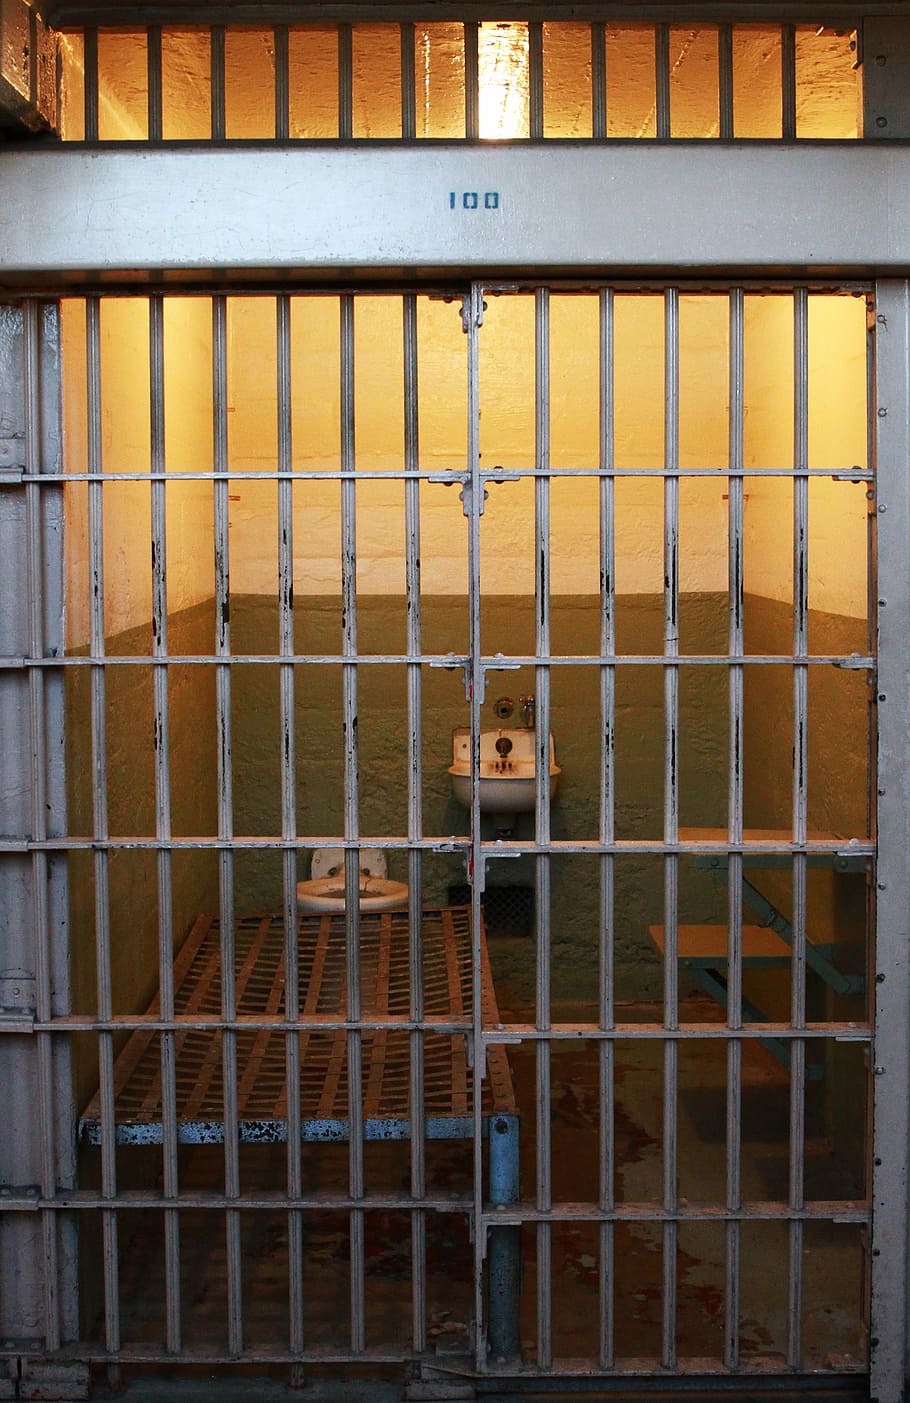 closed gray metal gate jail, cell, alcatraz prison, bars, behind bars